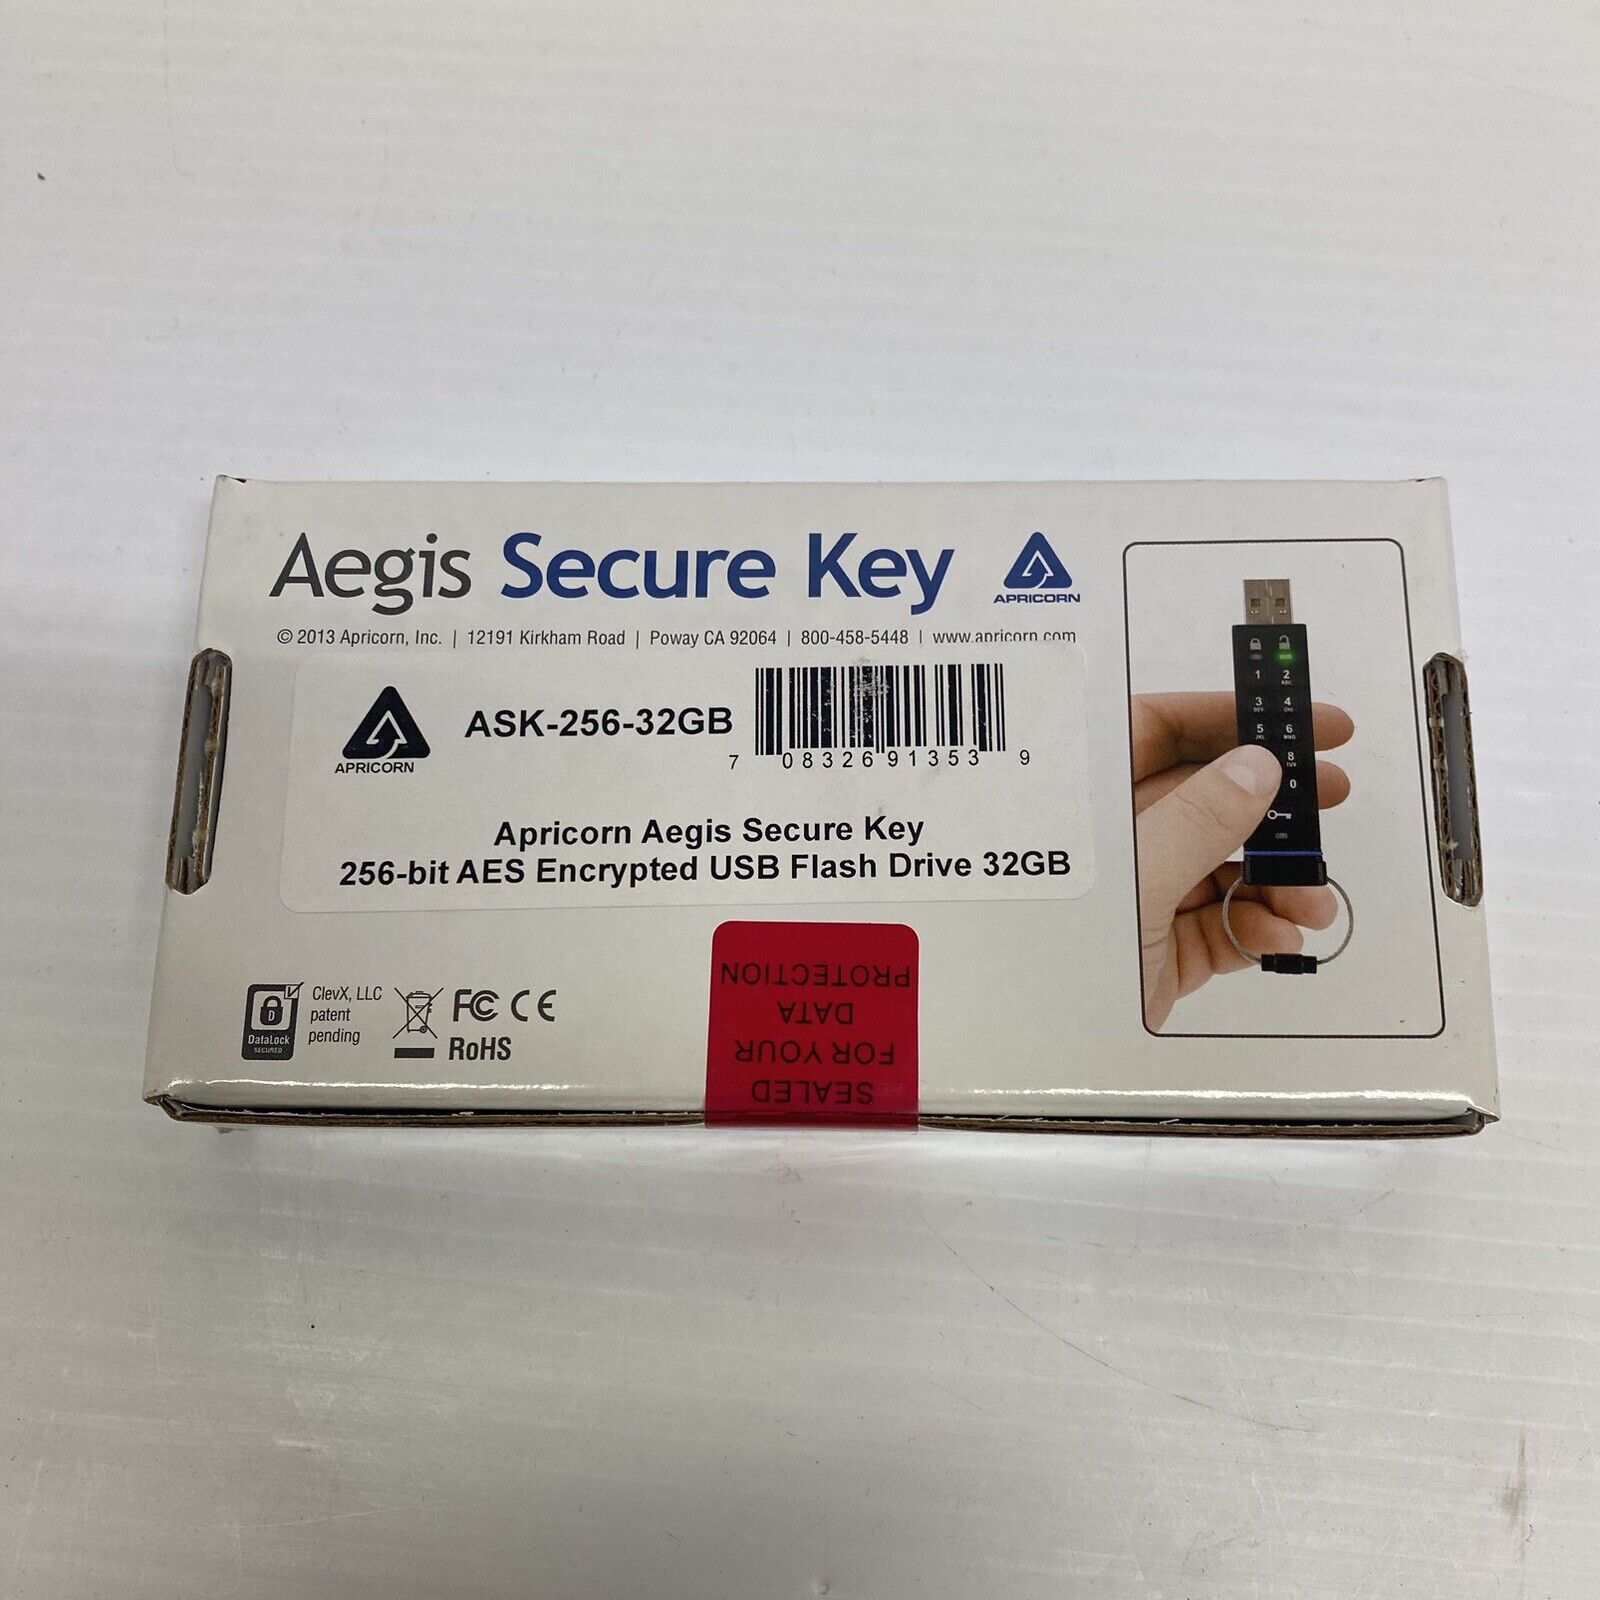 Apricorn Aegis Secure Key 32GB Encrypted USB 3.1 Flash Drive ASK-256-32GB